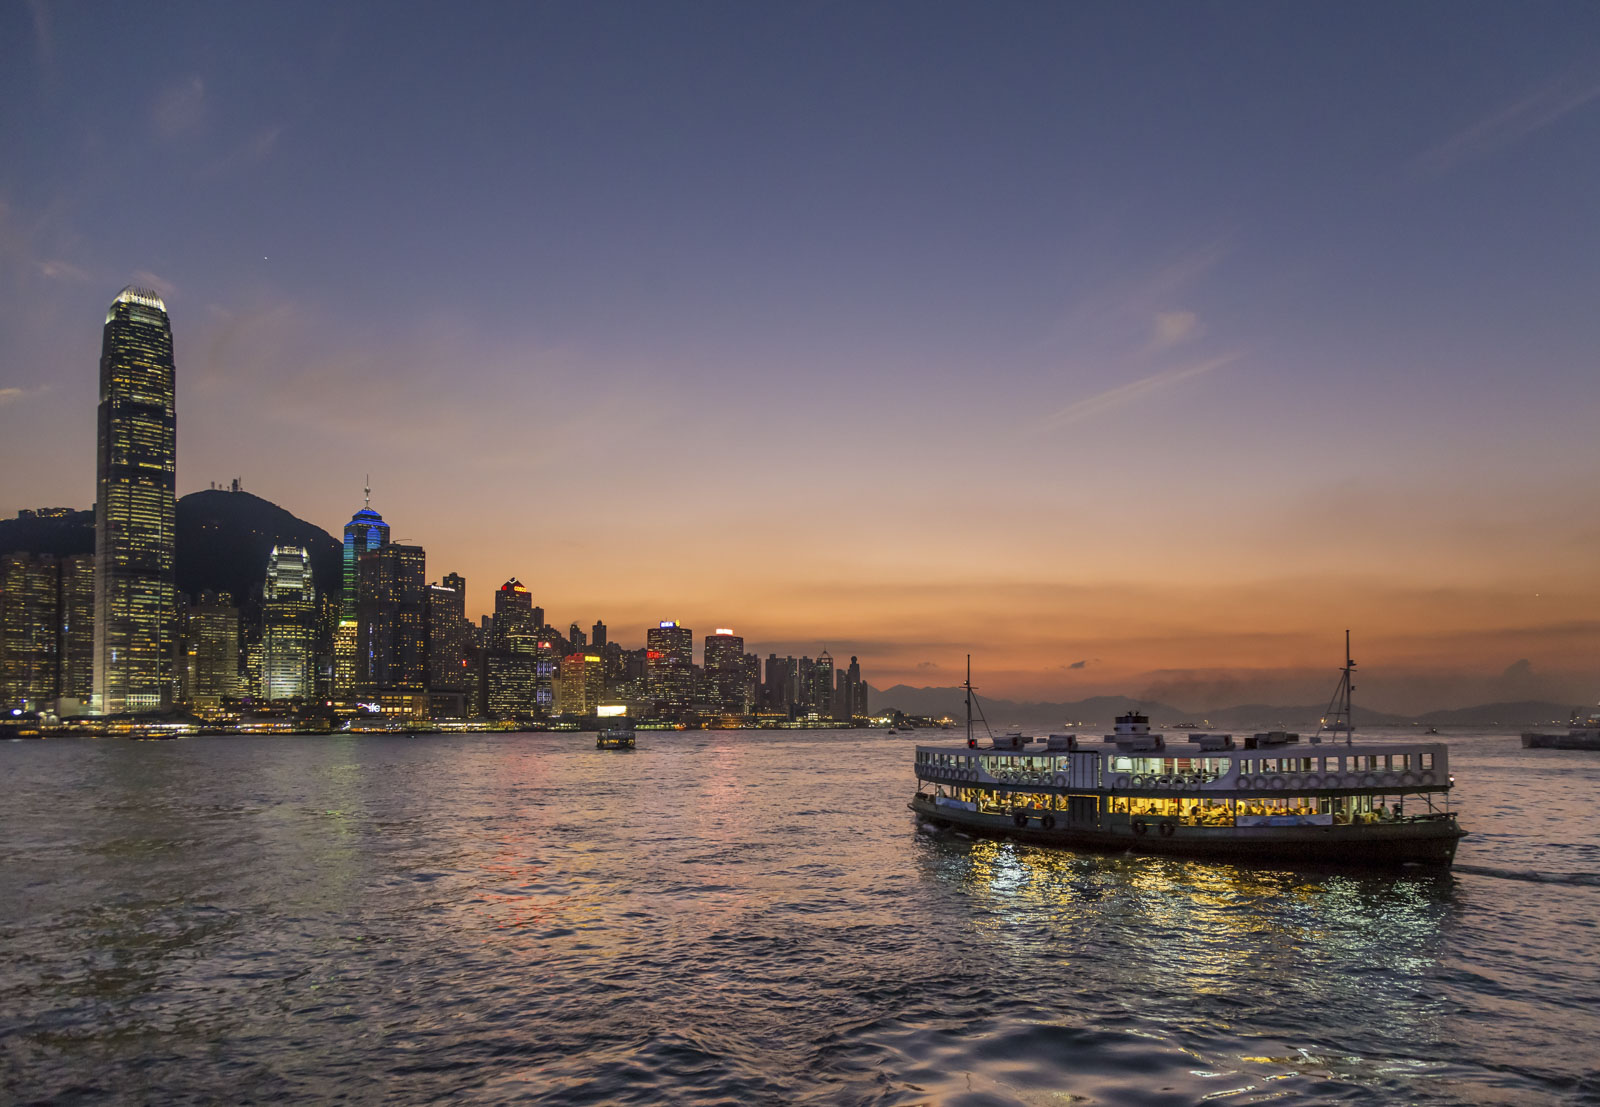 Star Ferry, Marco Polo Club Members Choice Award, Hong Kong, The unforgettable hong kong experience